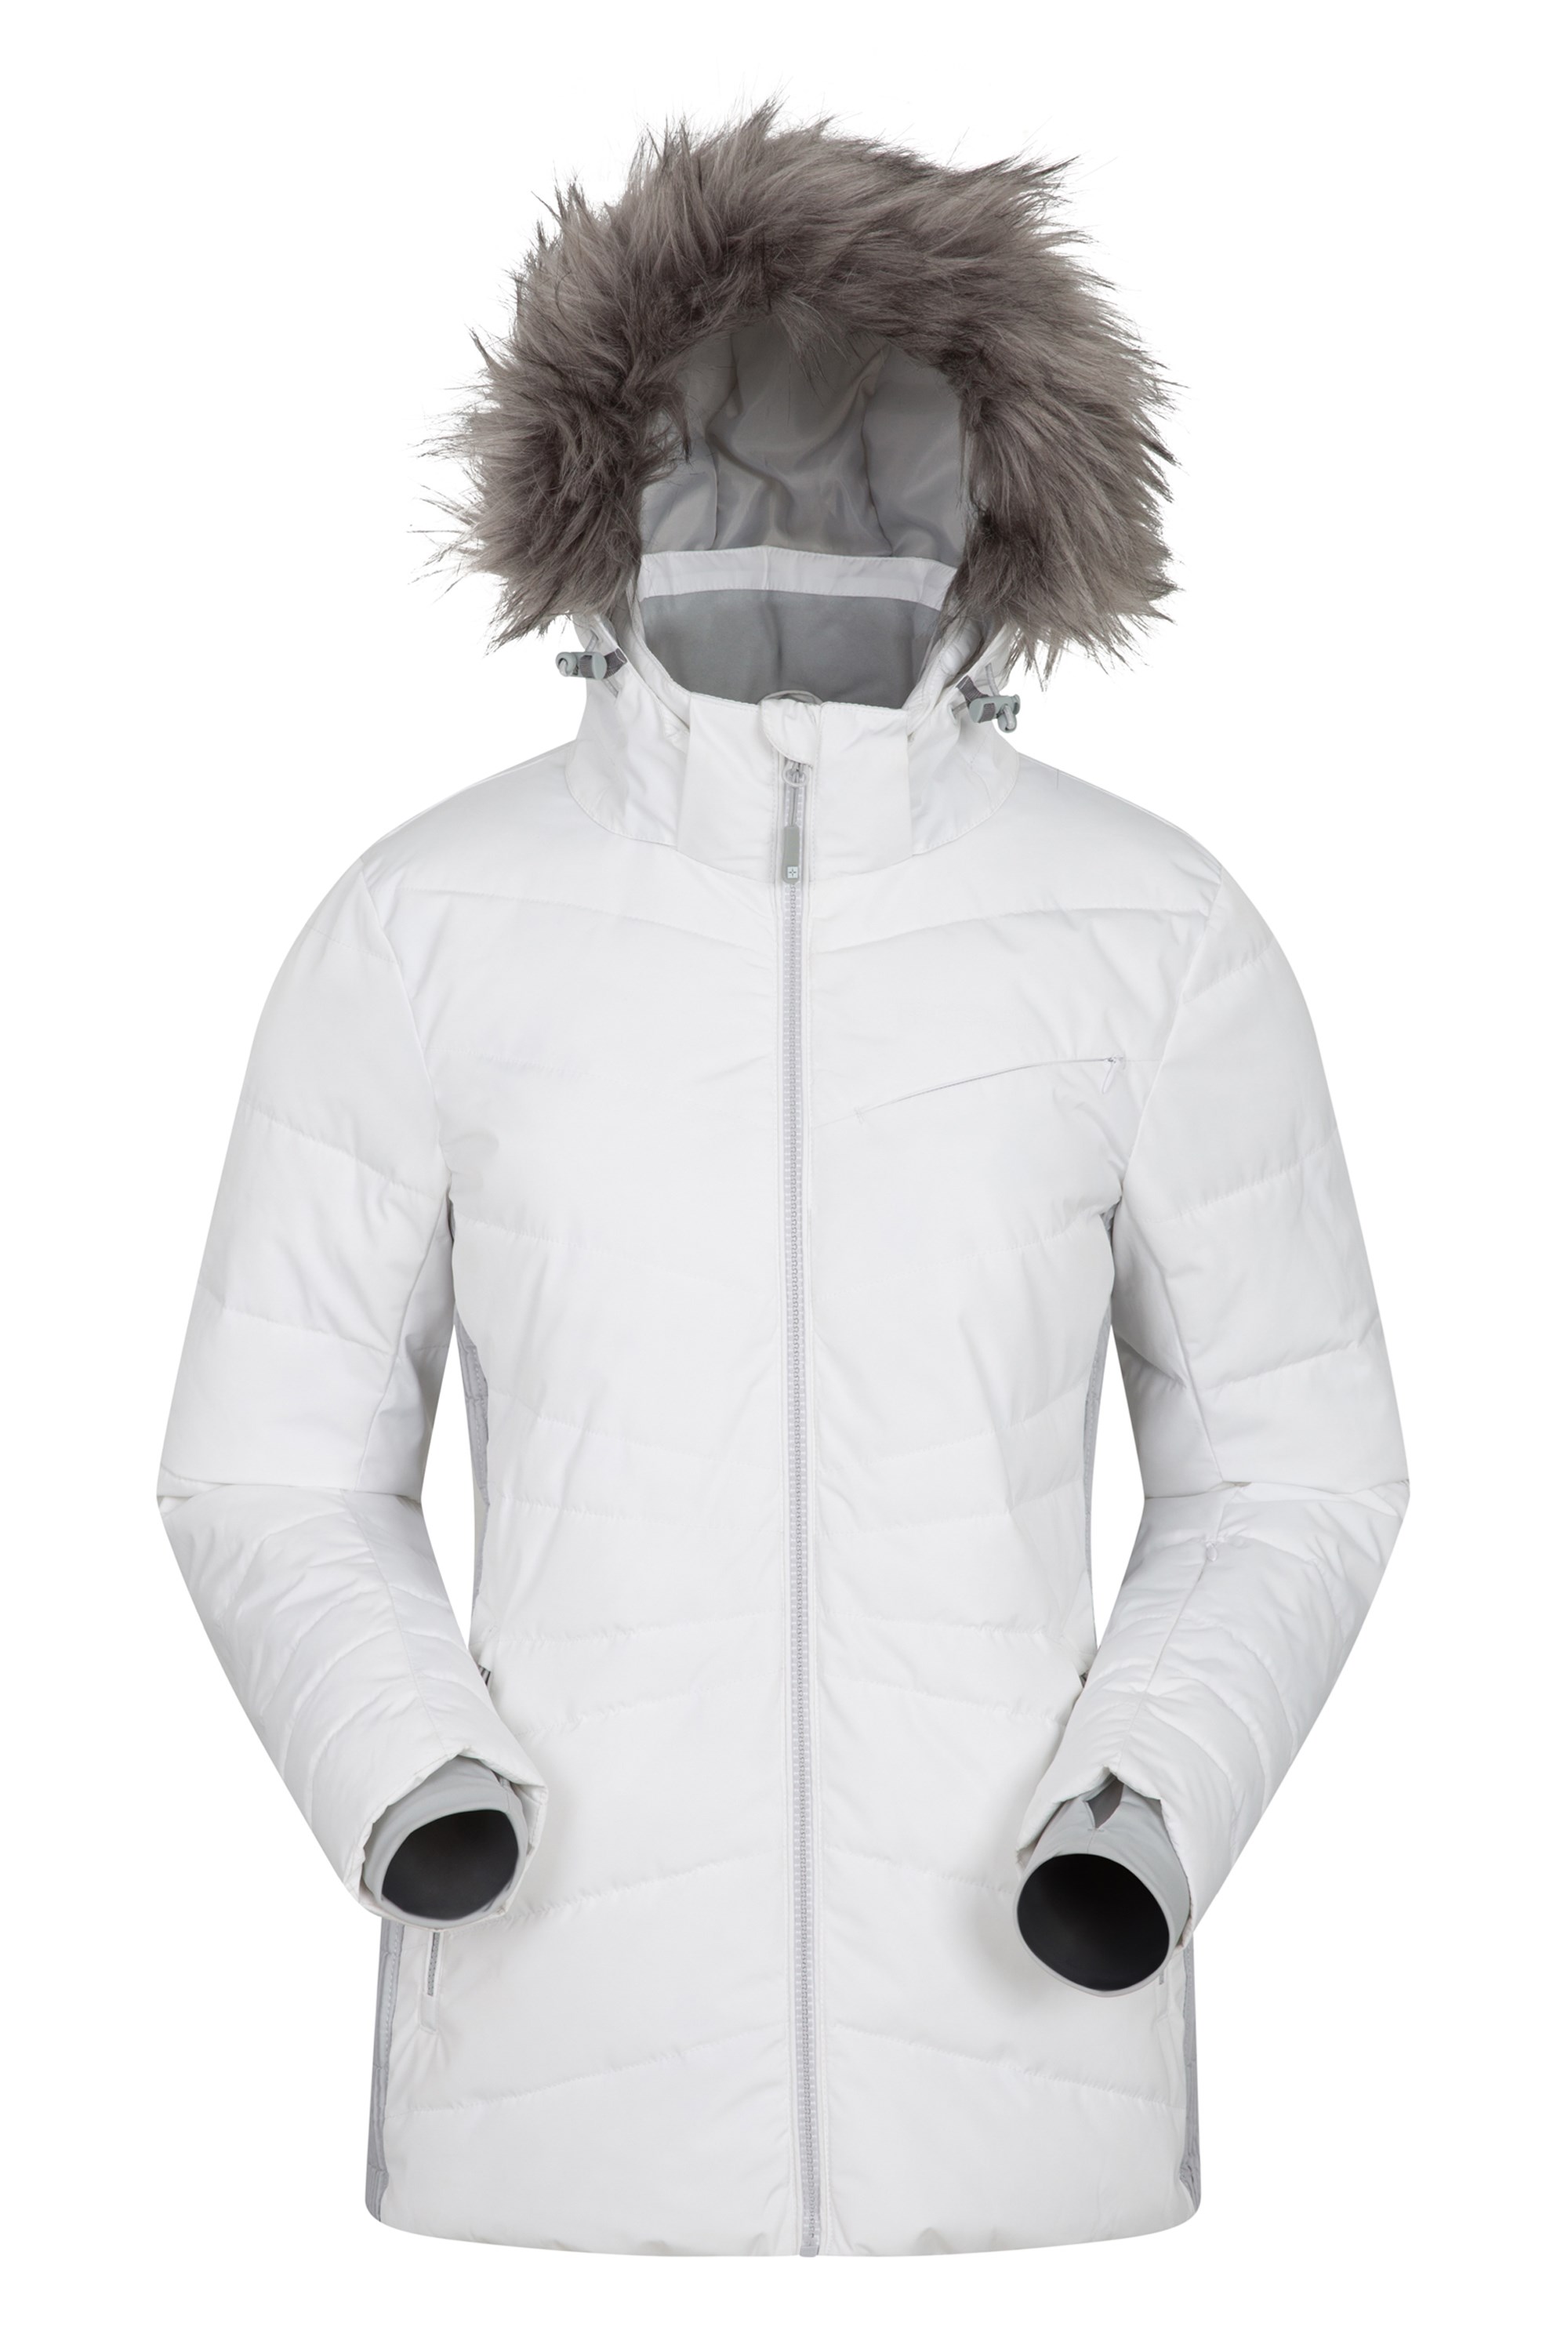 Arctic Air Womens Padded Ski Jacket - White